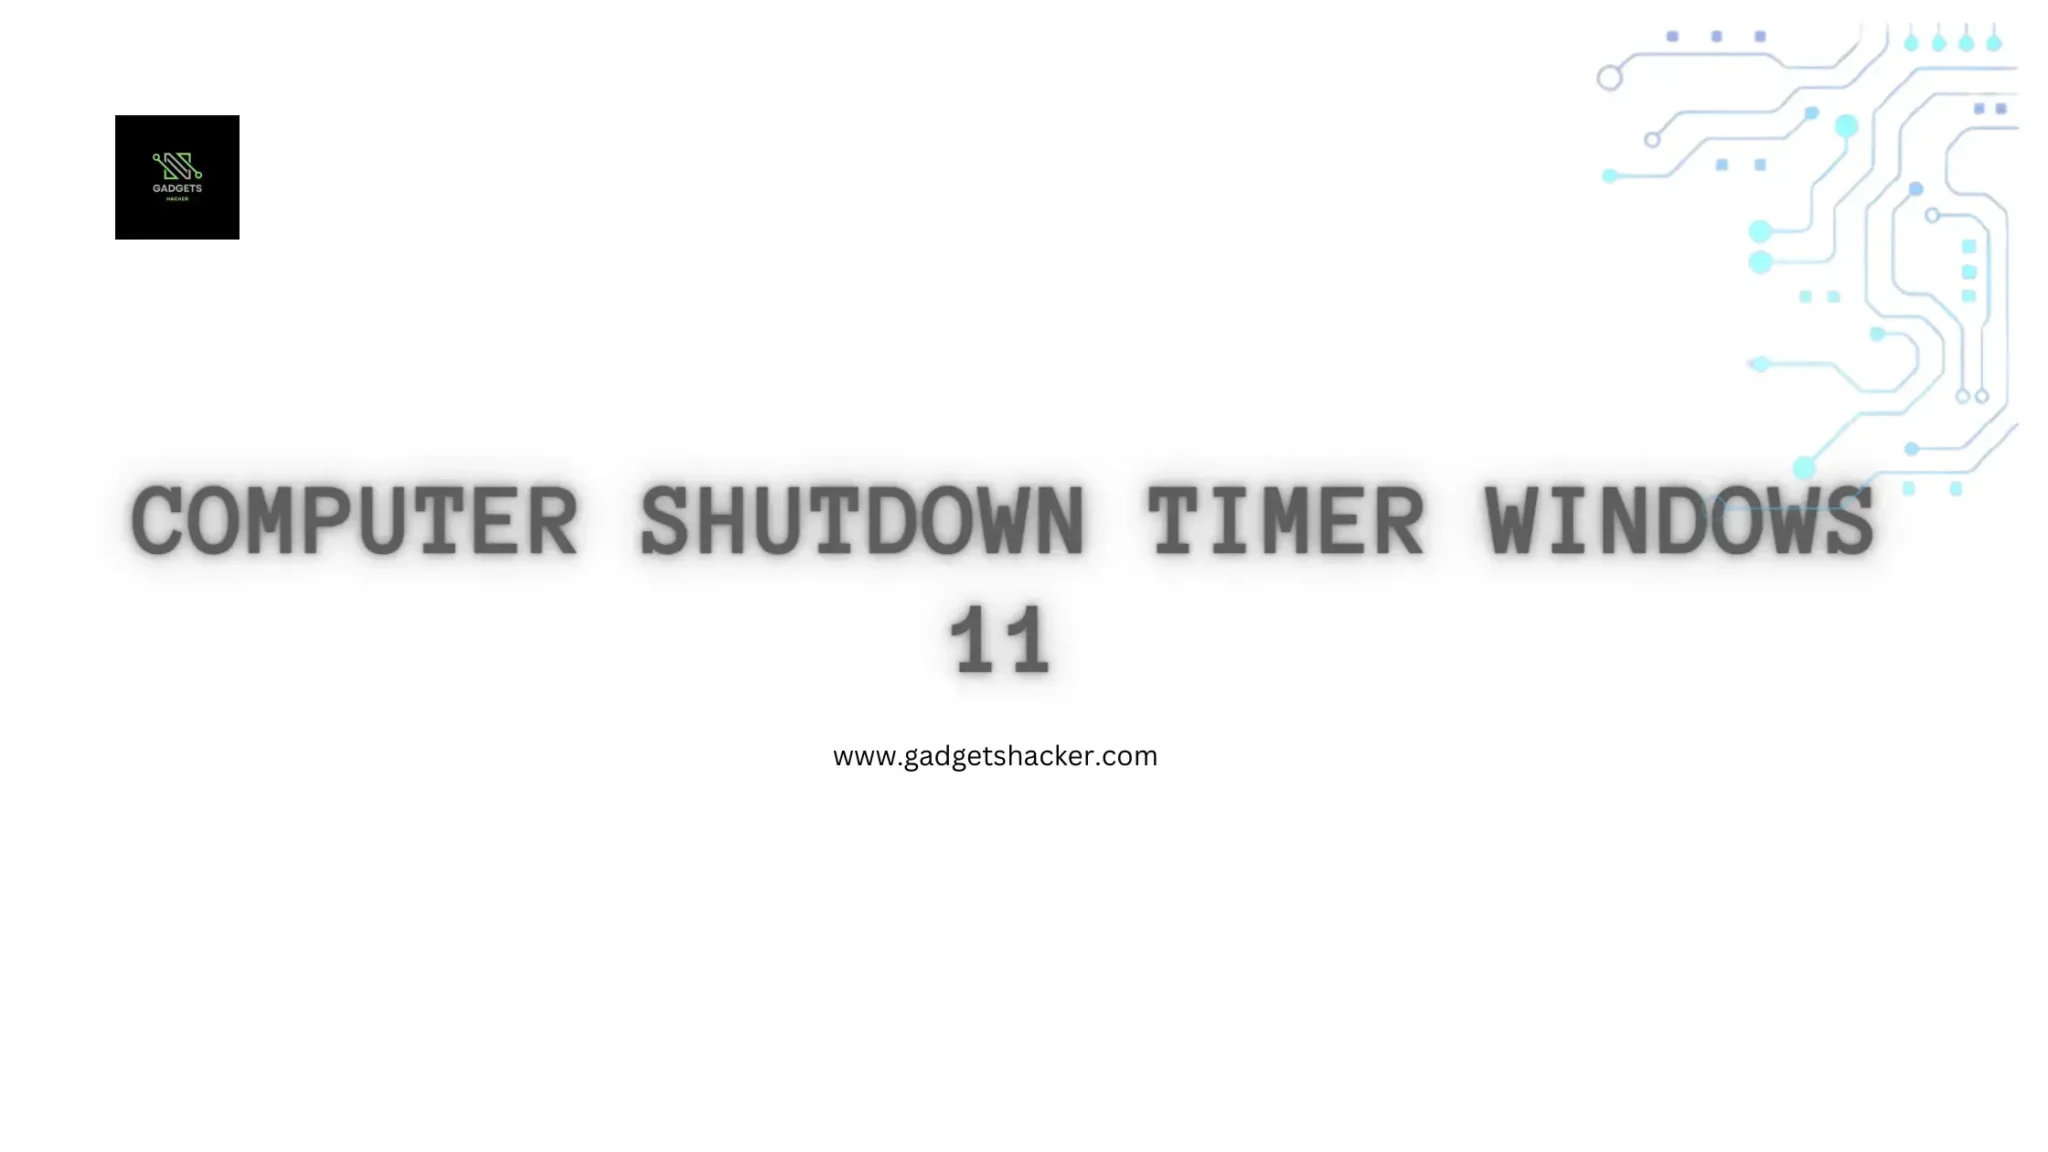 Computer shutdown timer Windows 11